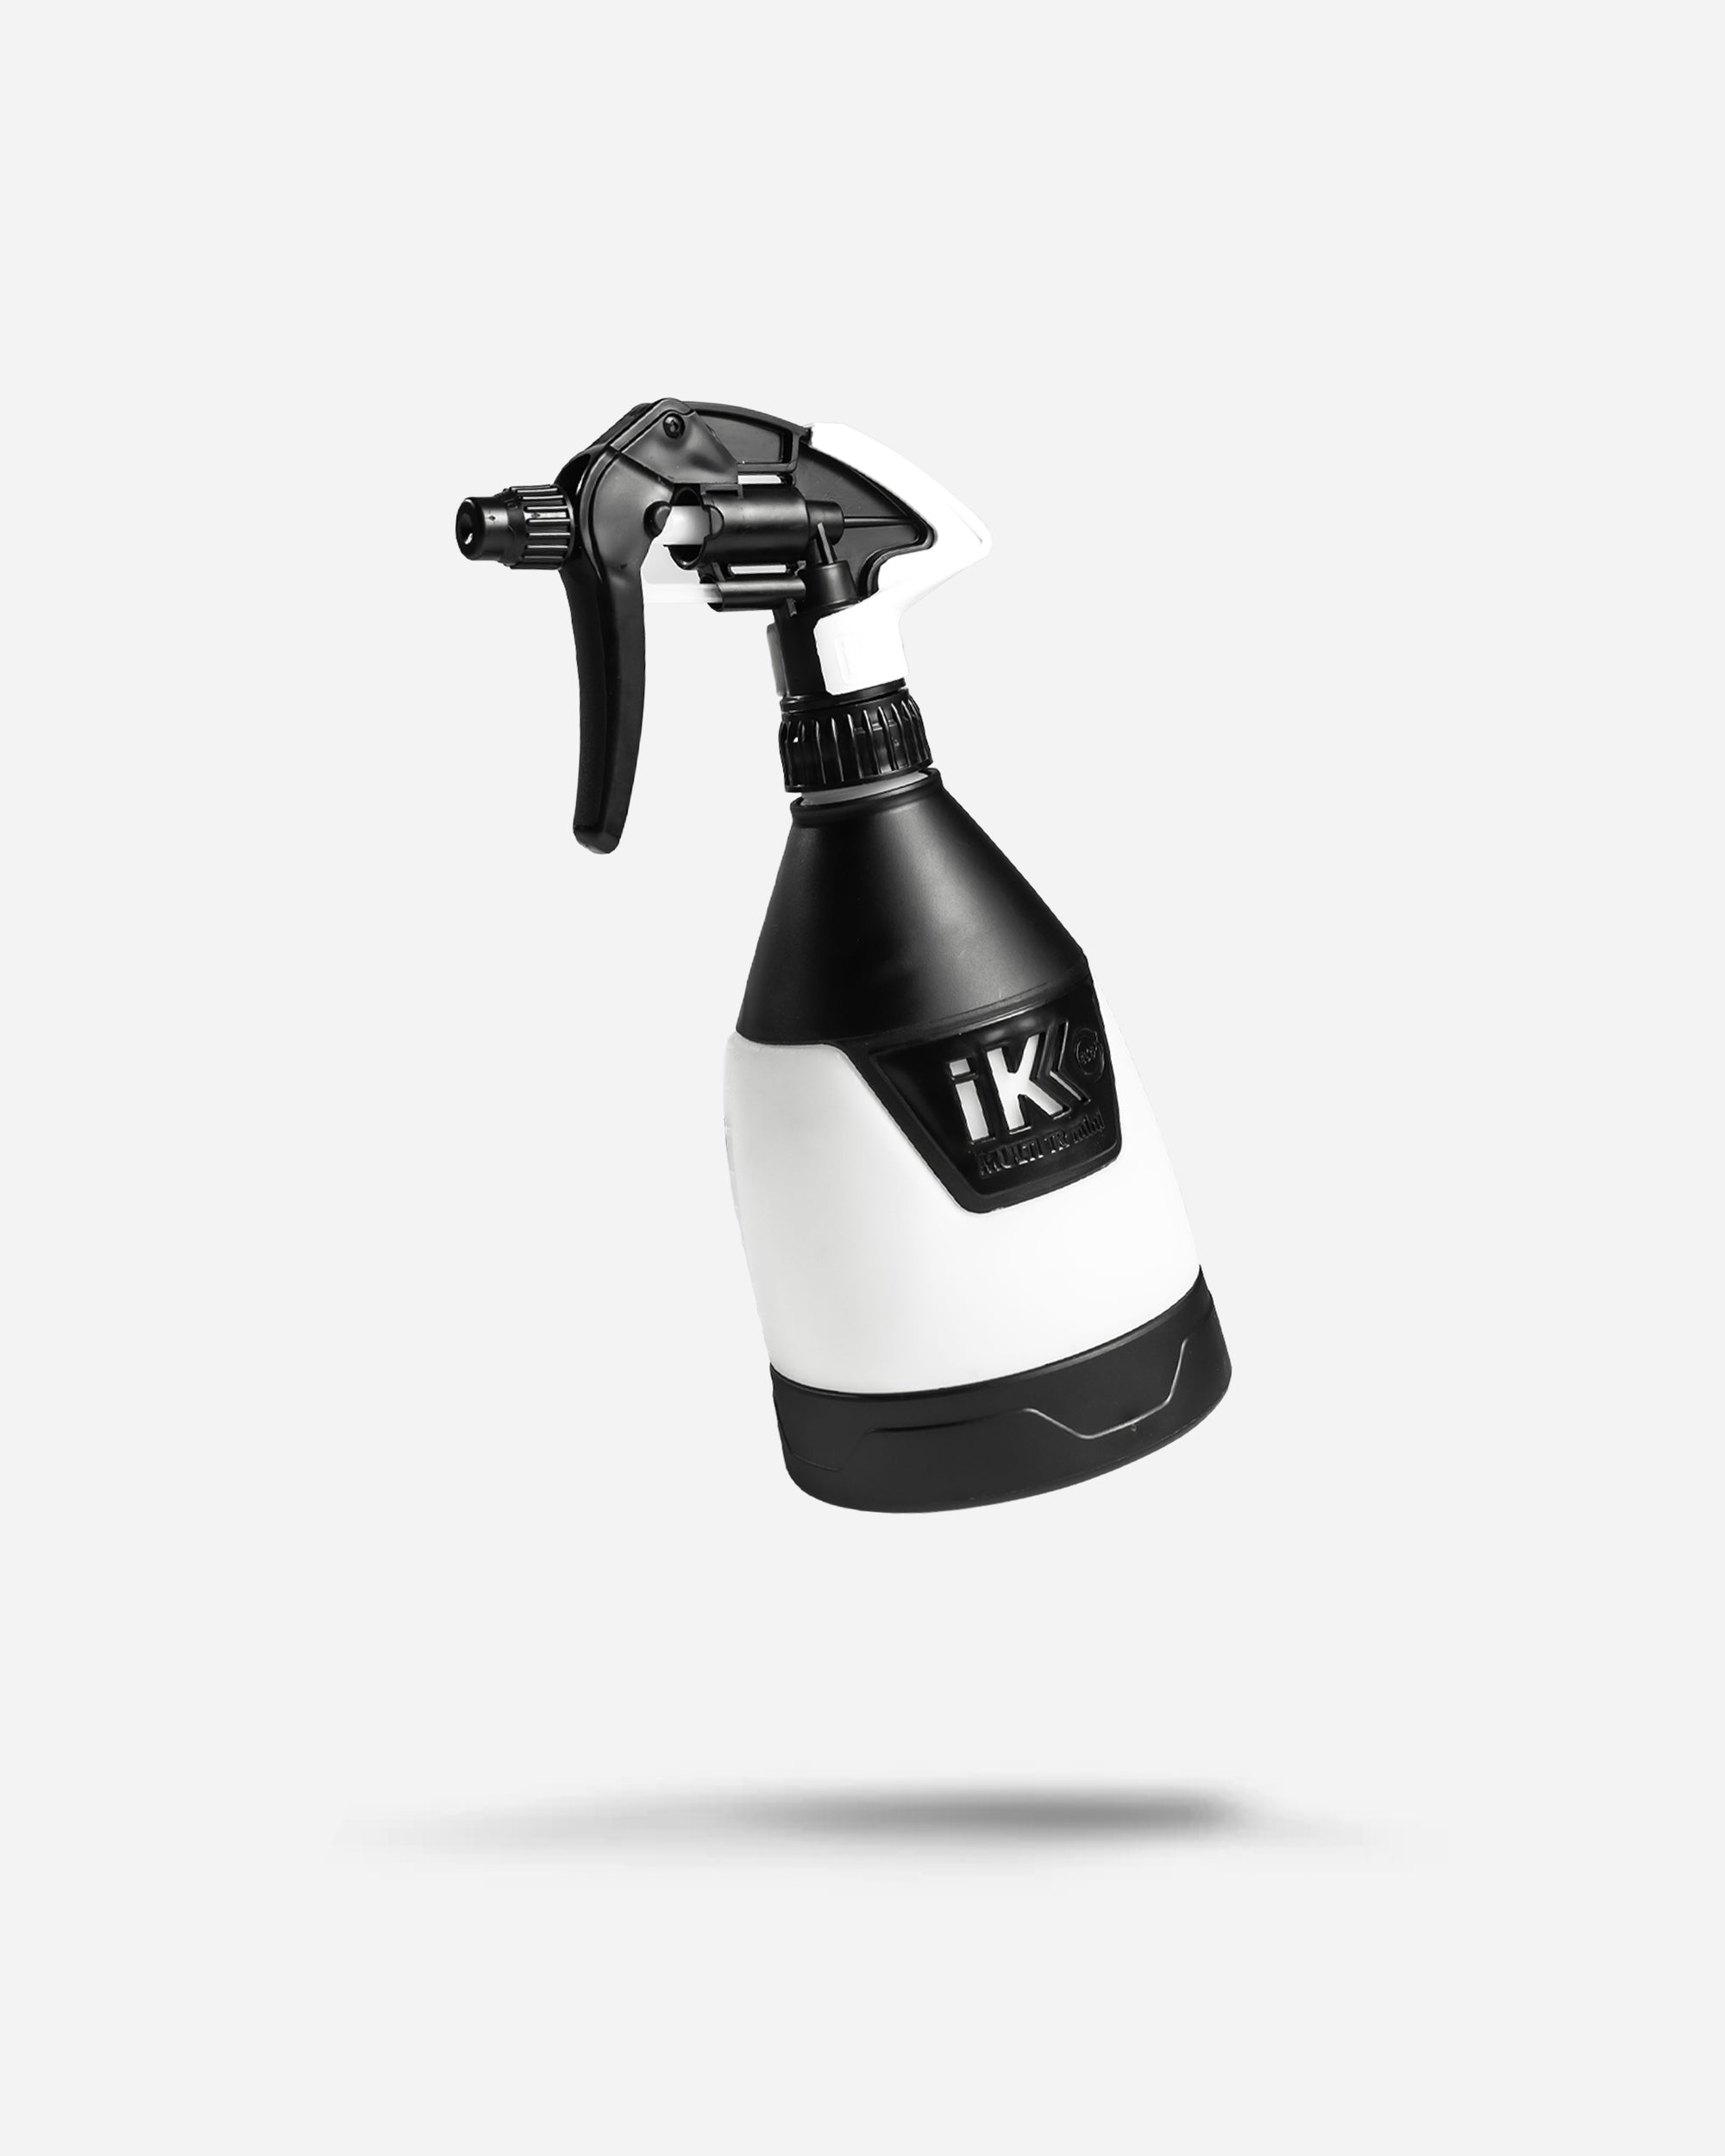 IK Multi Pro 2 Sprayer – WESTCLEAR